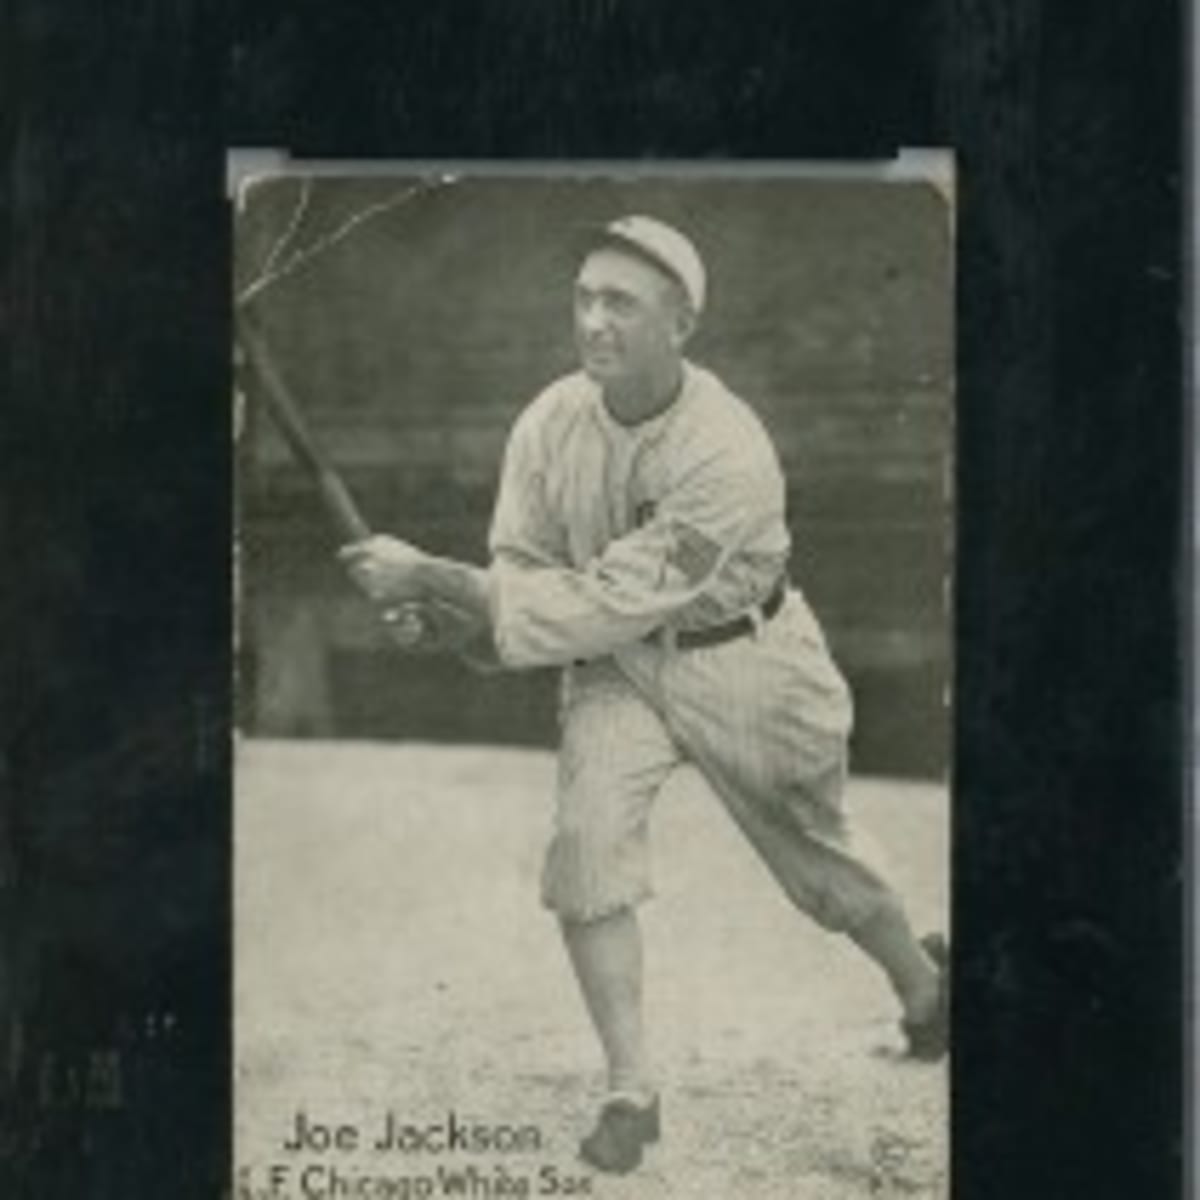 Rare 1919 photo of Shoeless Joe Jackson available at auction